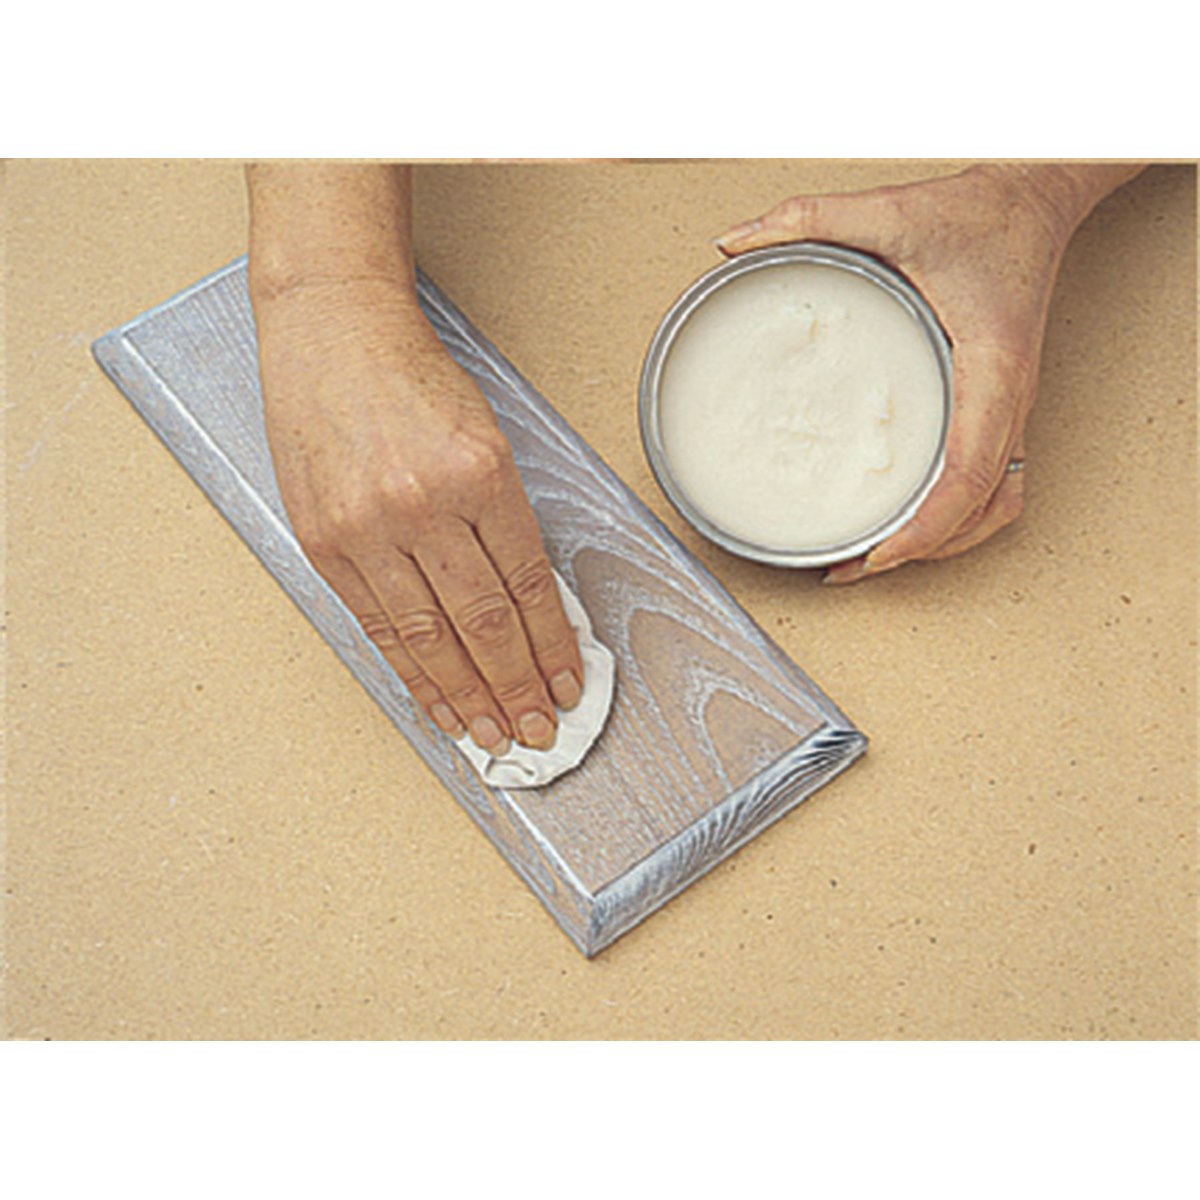 How to Apply Liberon Liming Wax